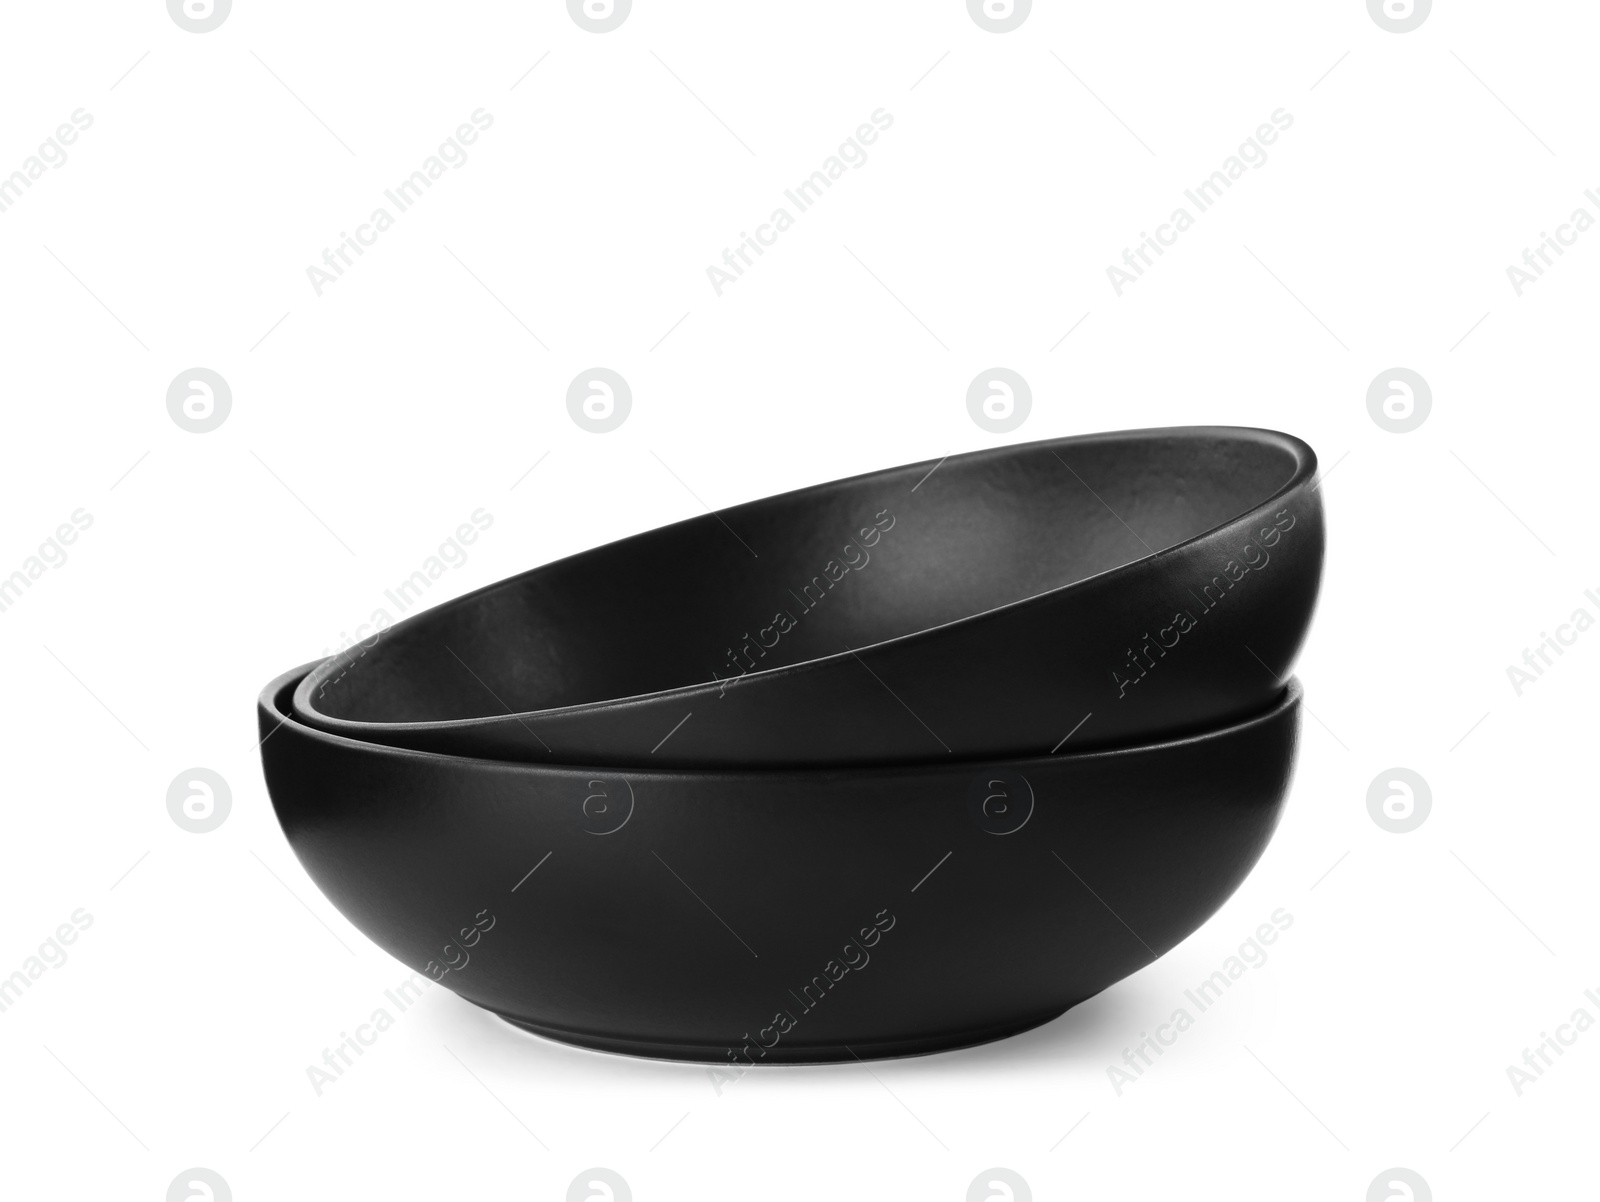 Photo of New black ceramic bowls on white background